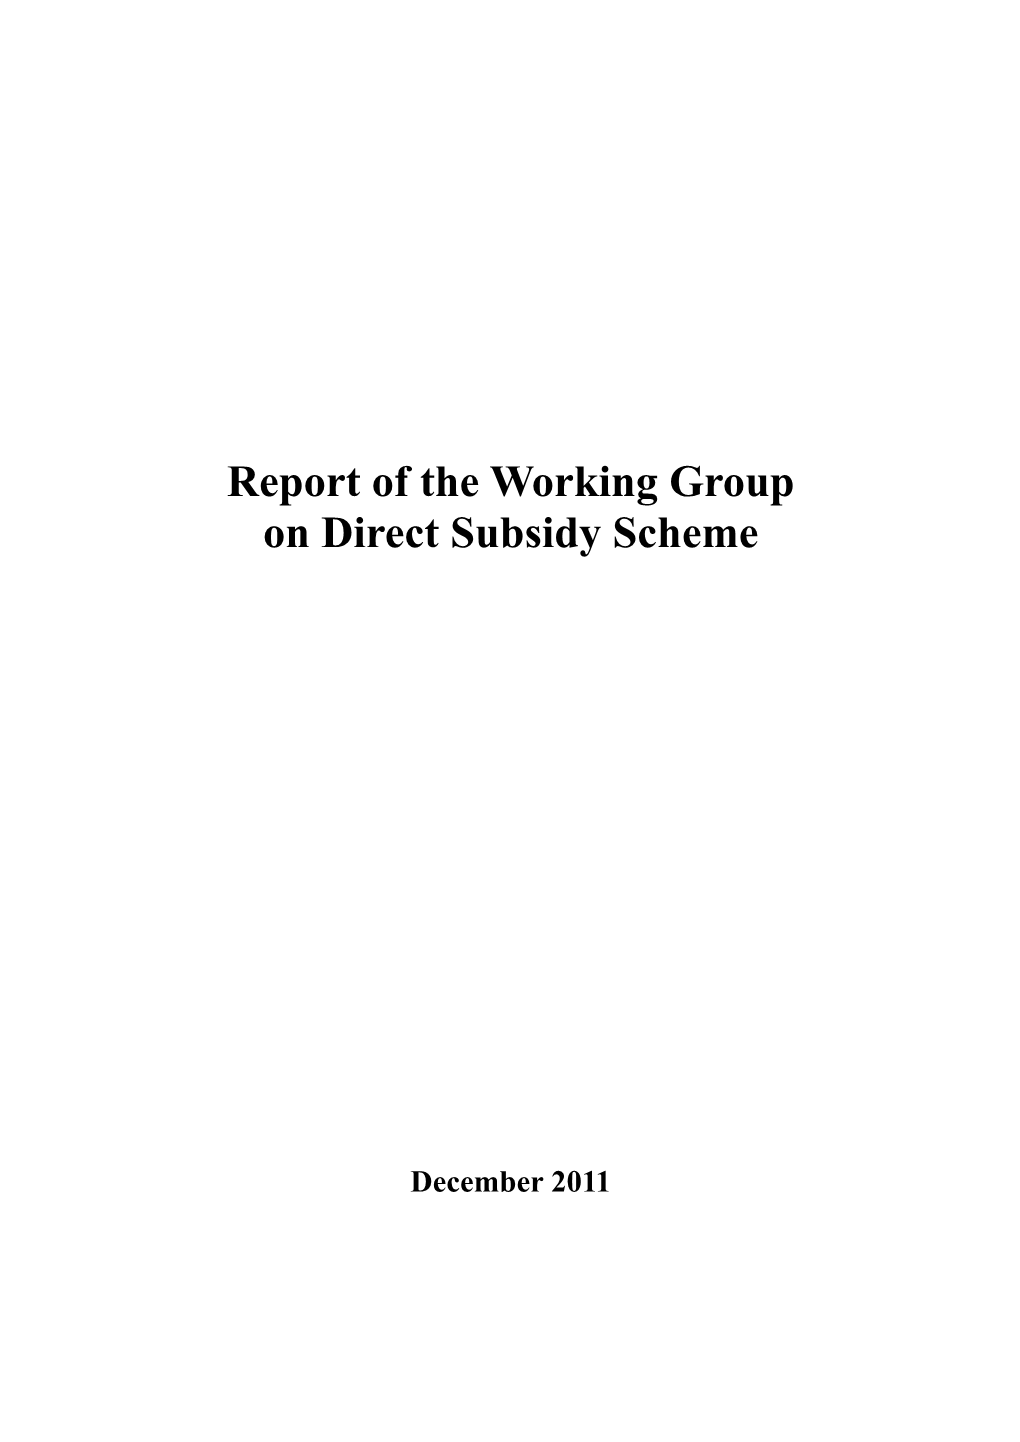 Direct Subsidy Scheme